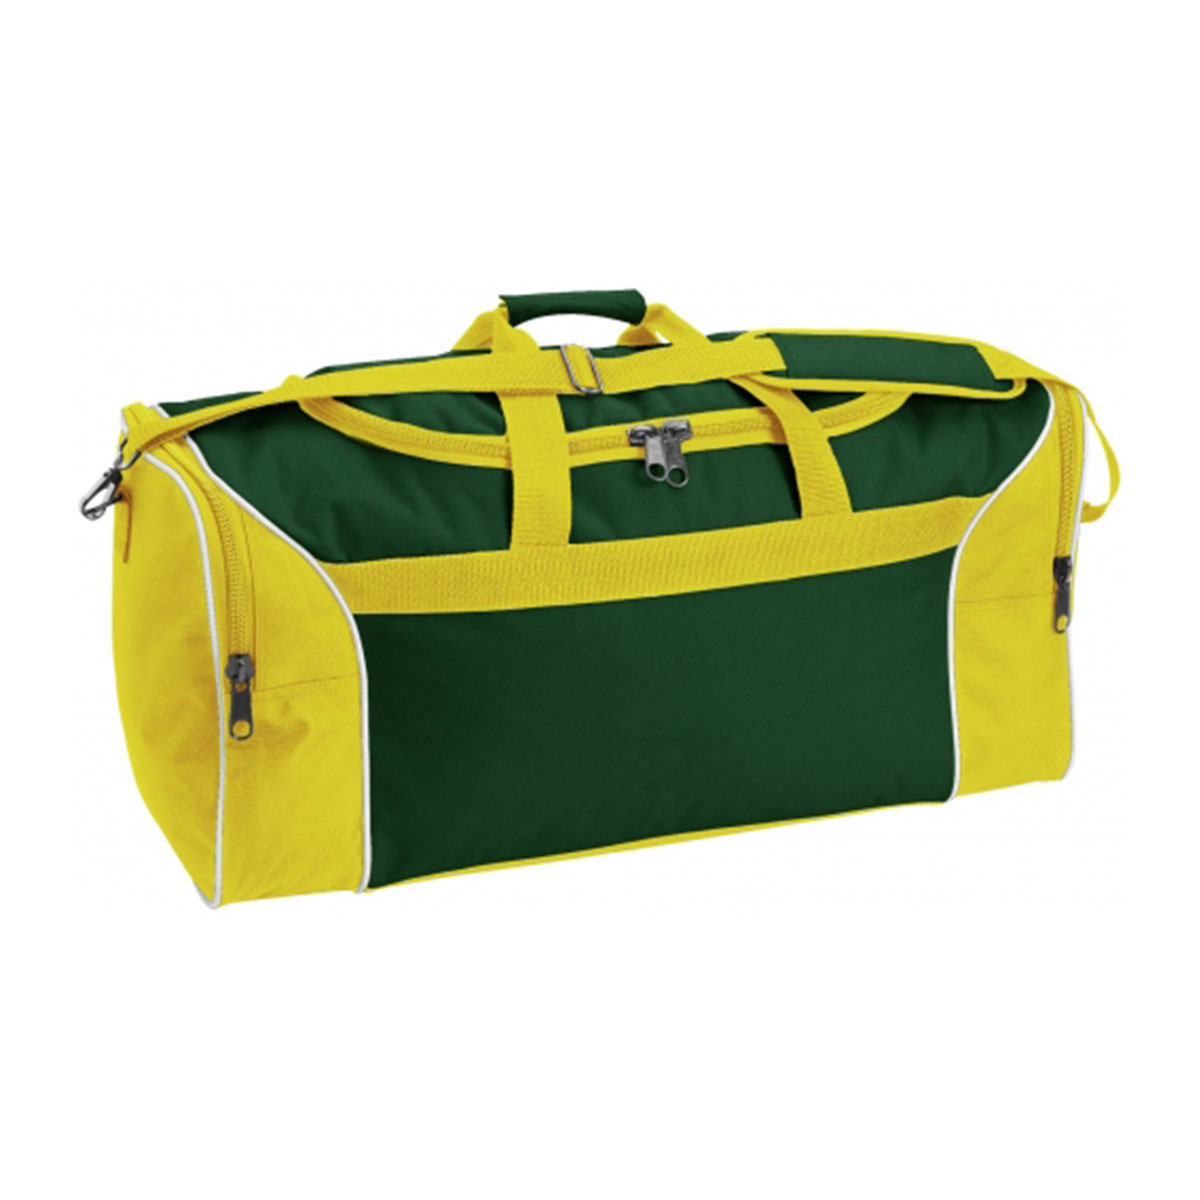 Tri-Colour Sports Bag | Branded Sporty Bag | Denier Nylon